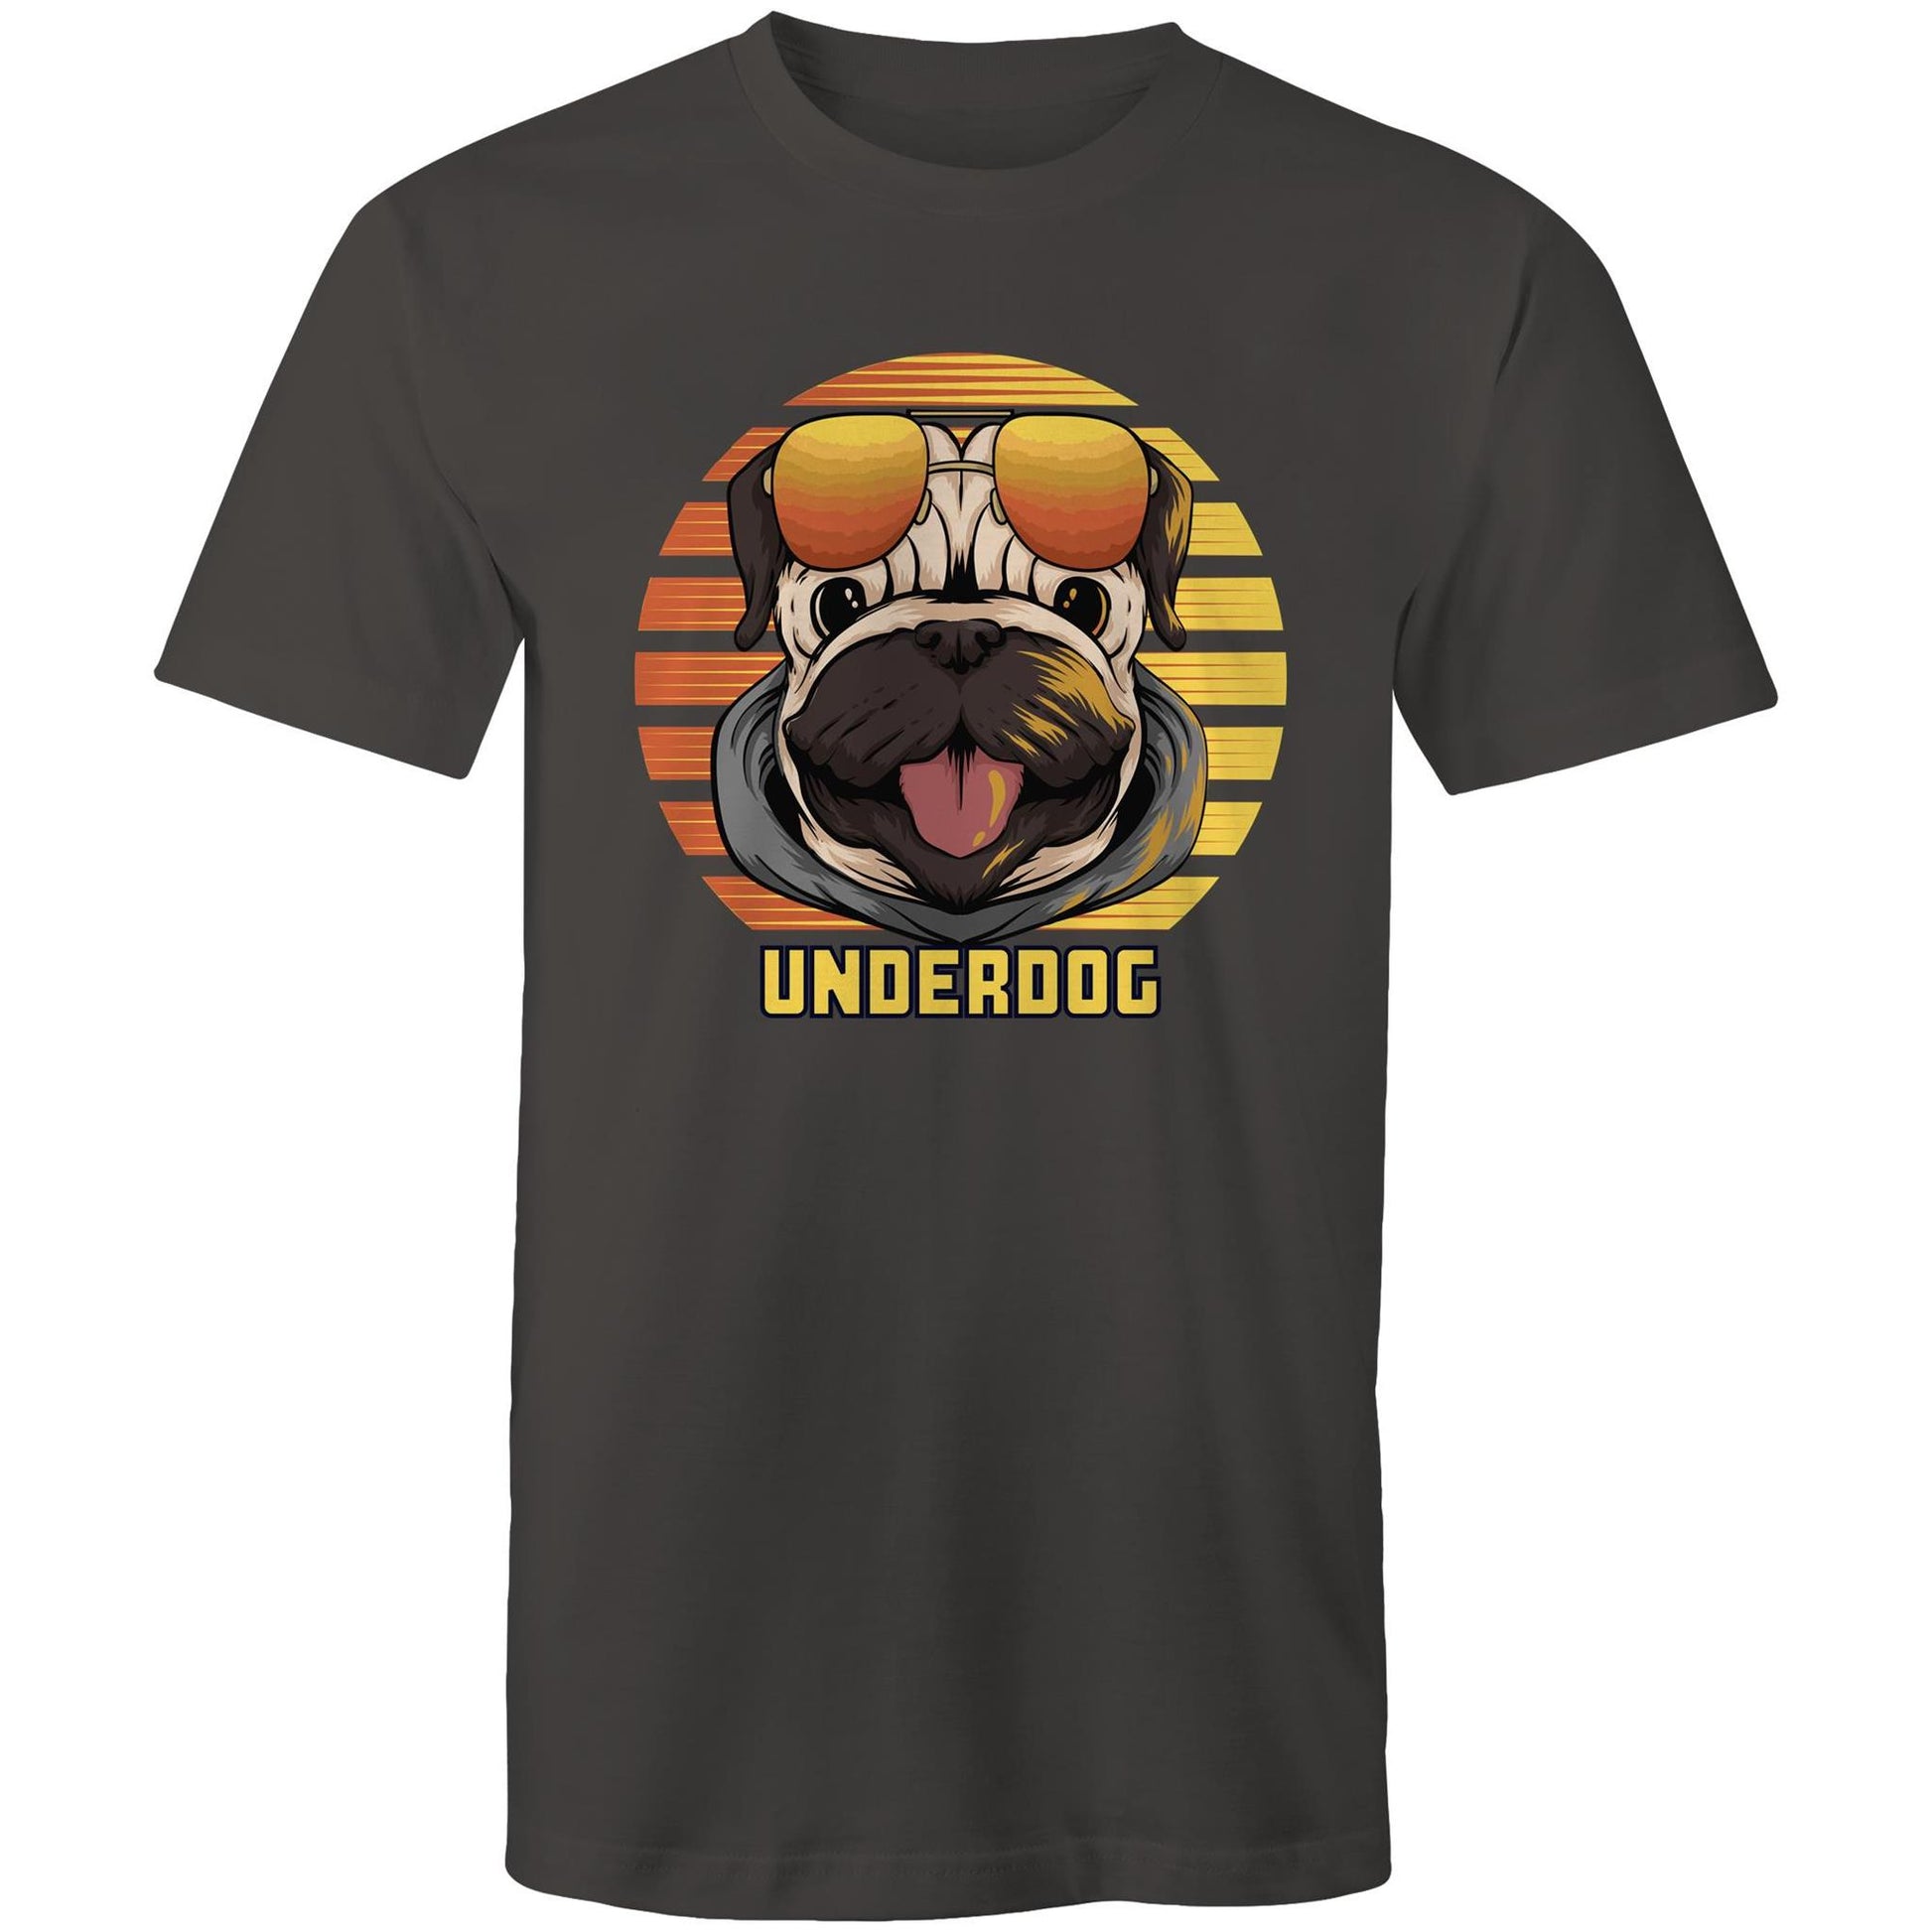 Underdog - Mens T-Shirt Charcoal Mens T-shirt animal